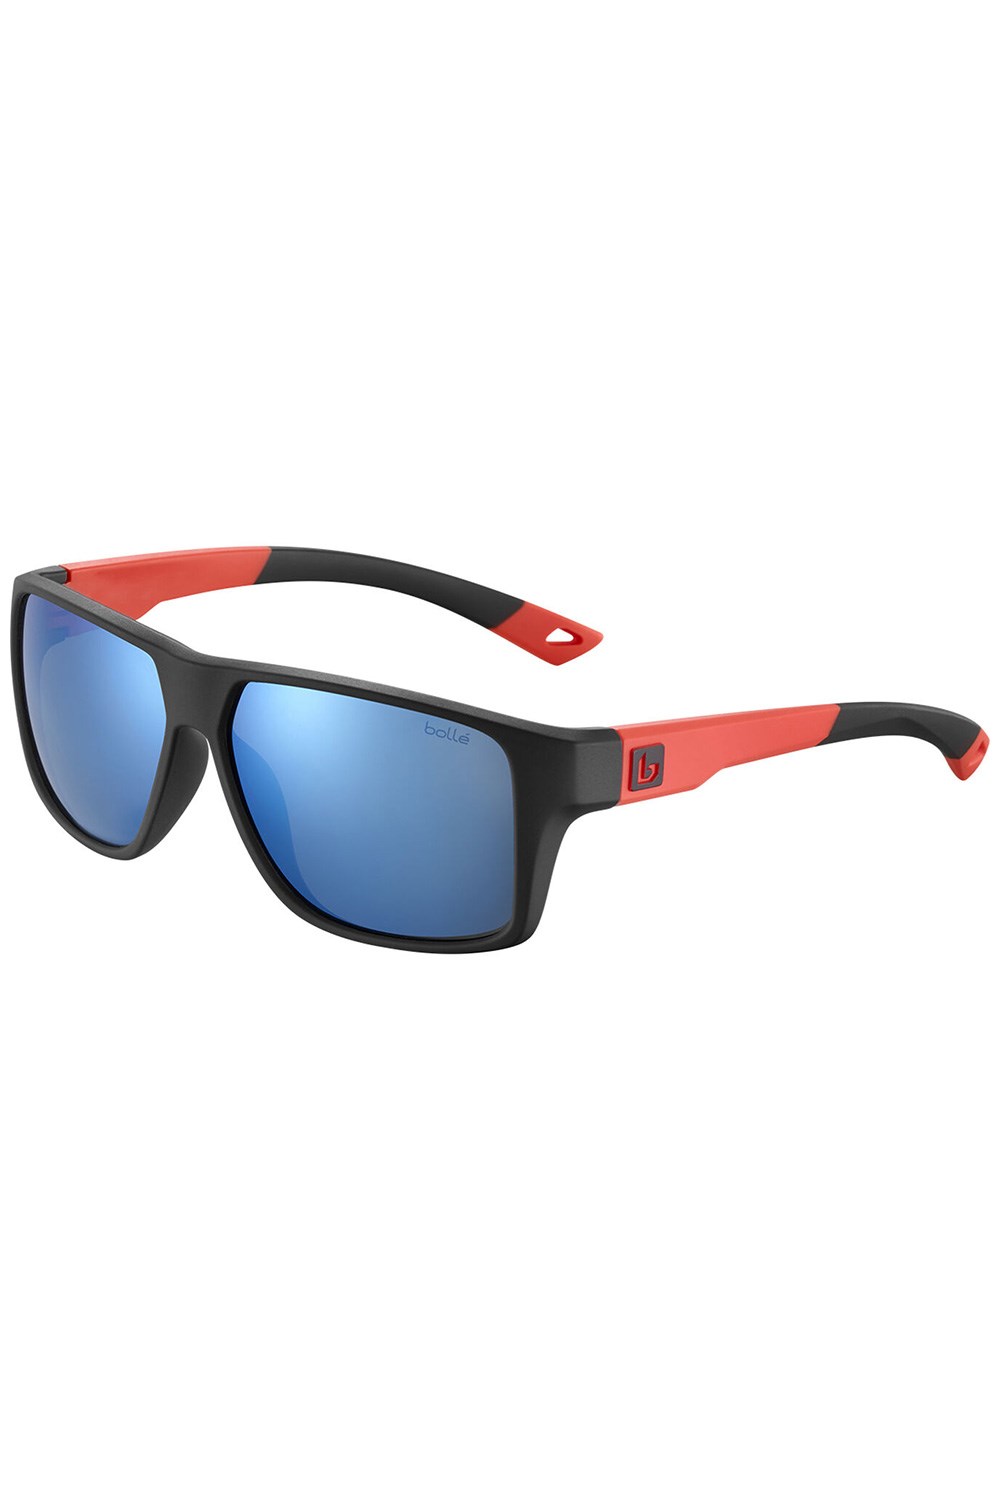 Brecken Floatable Unisex Water Sports Sunglasses -